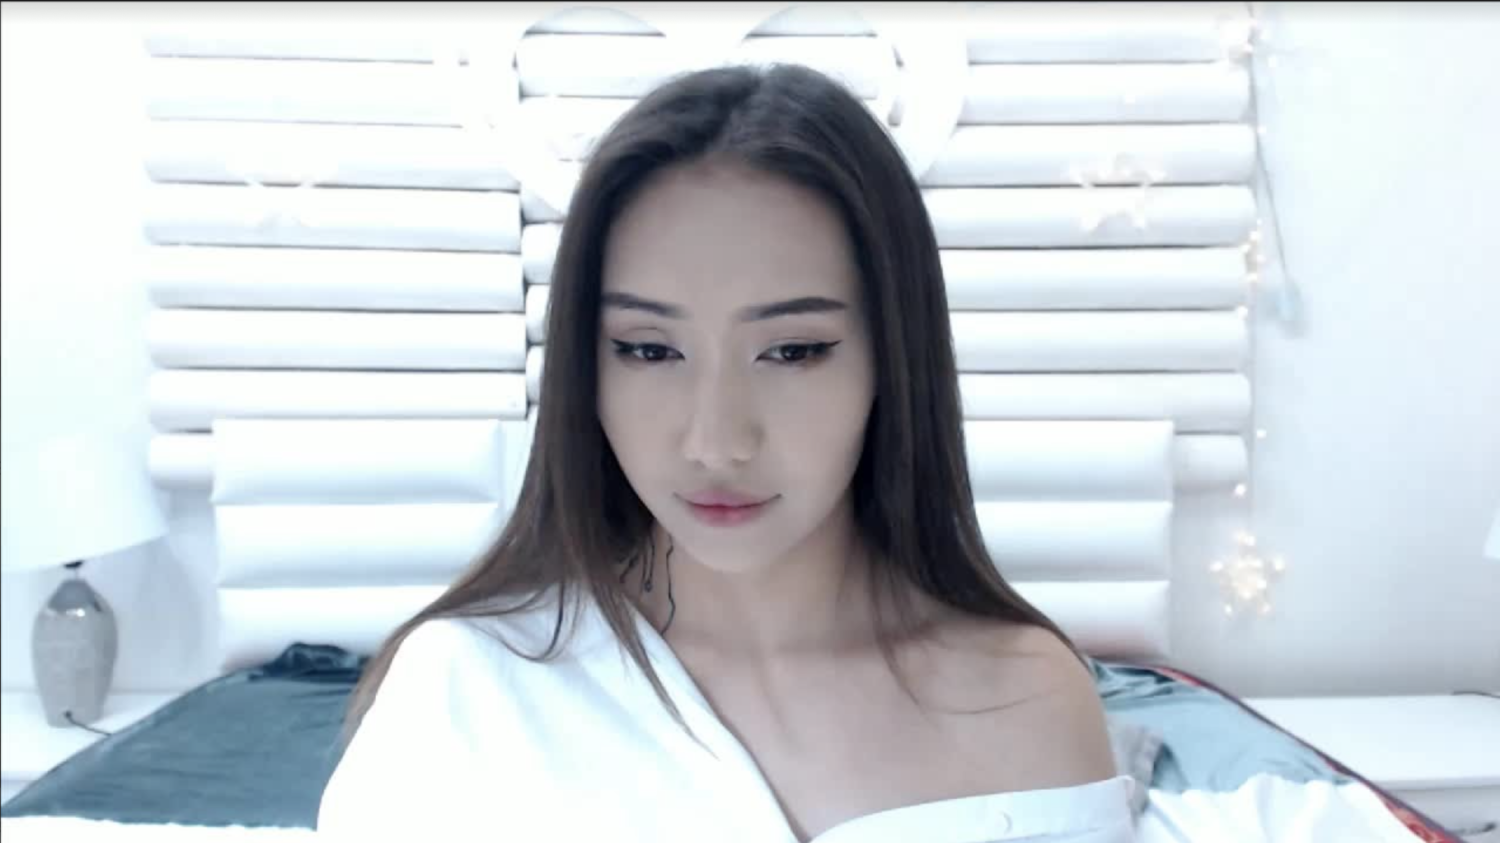 bob juhasz recommends Hot Korean Girl Webcam